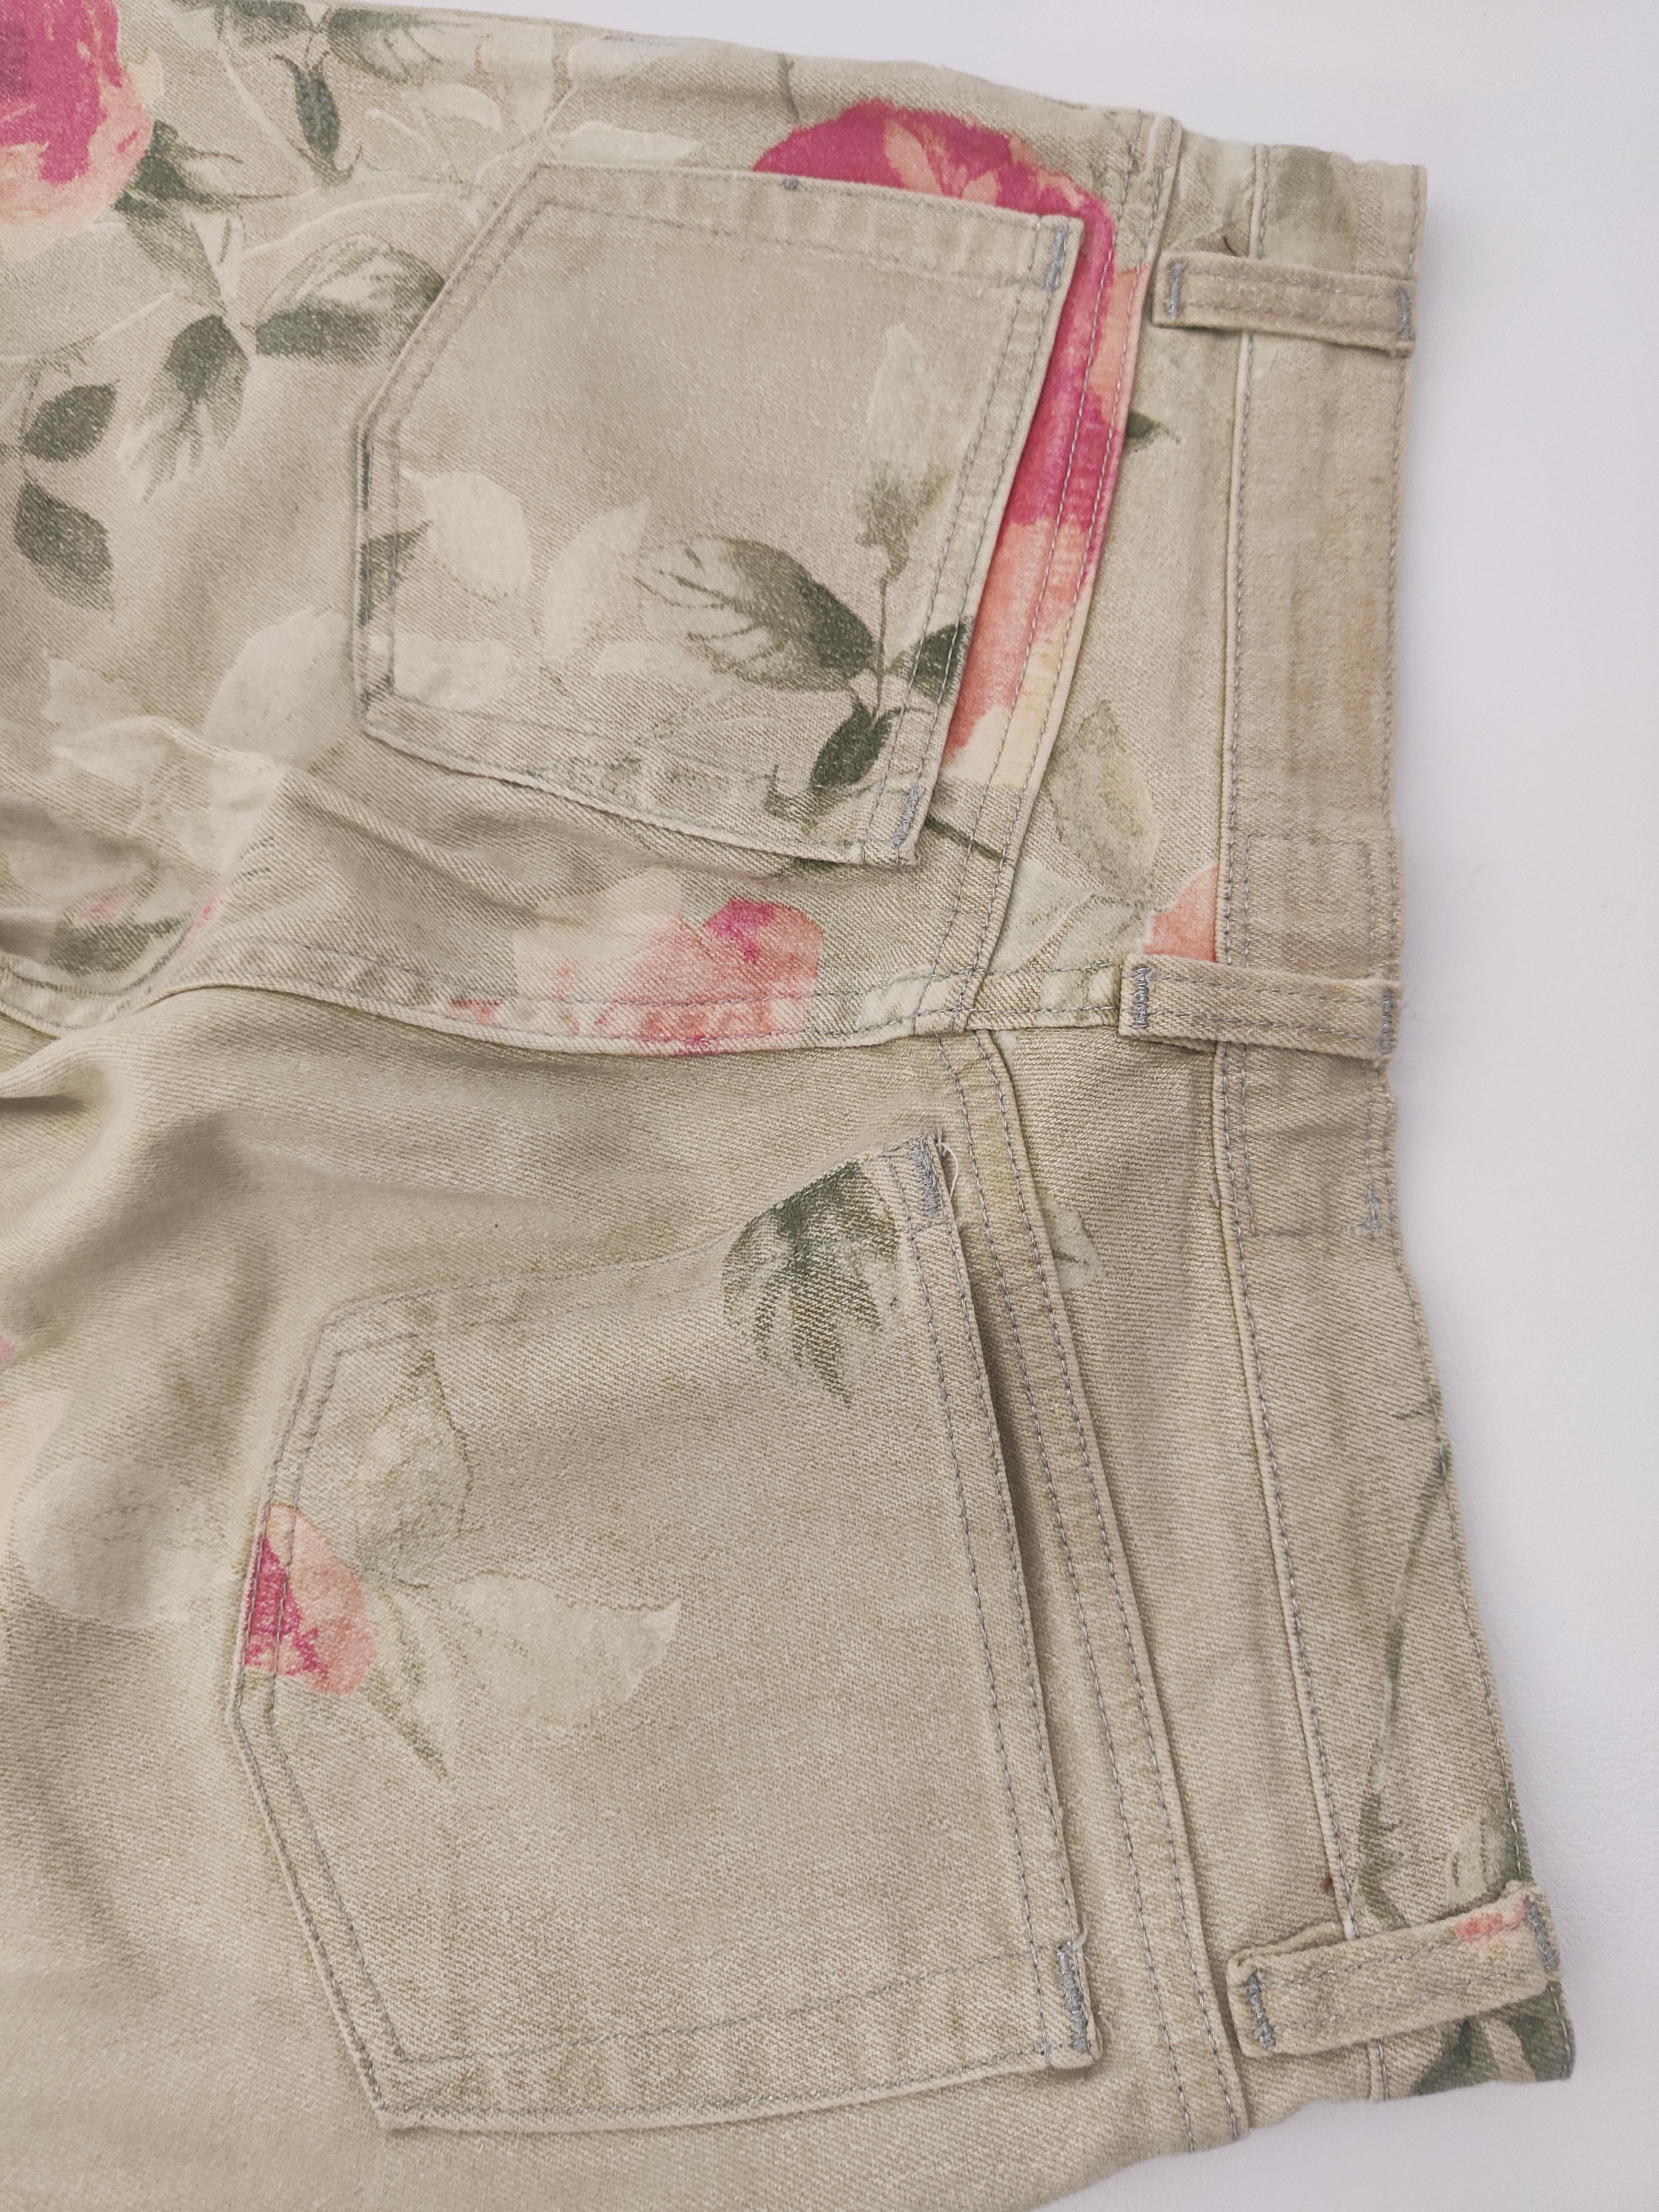 Roberto Cavalli multicoloured jeans
Size S
Waist 72 cm, lenght 194 cm 